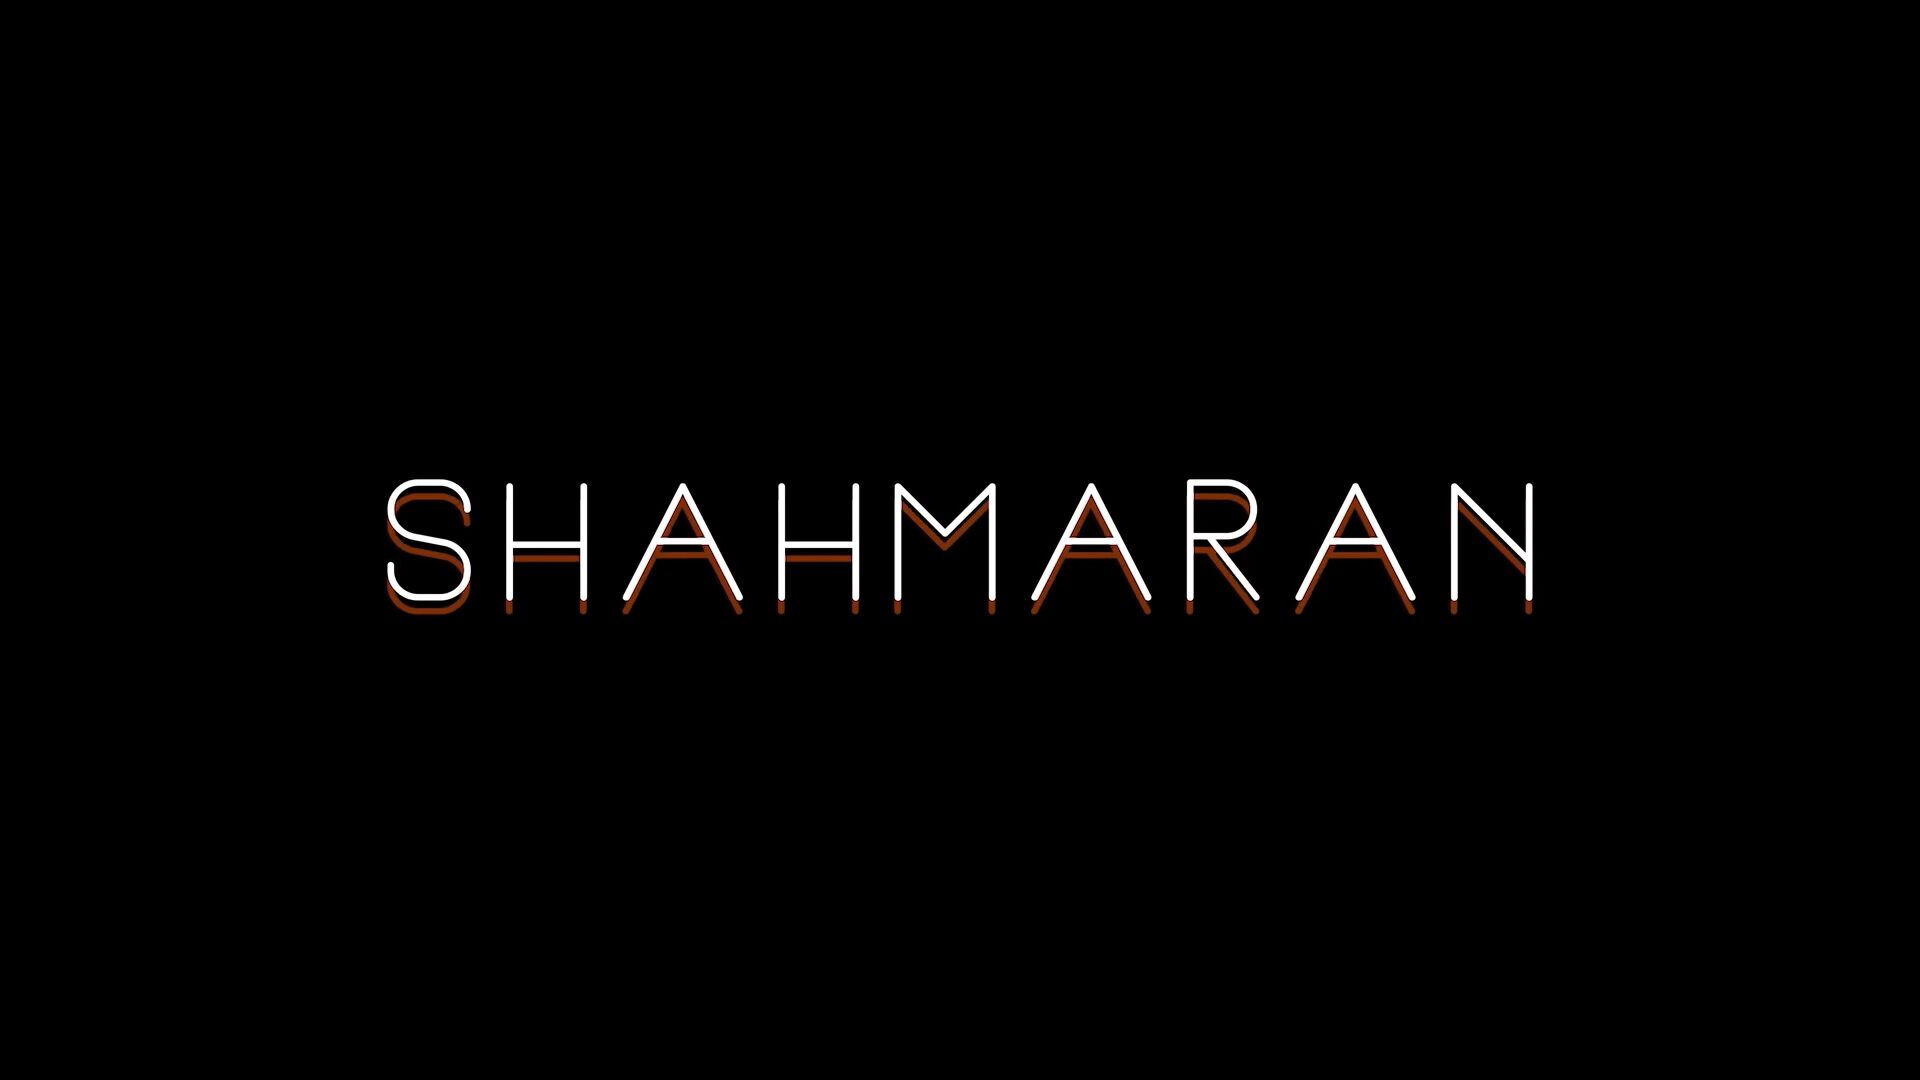 Shahmaran on Netflix